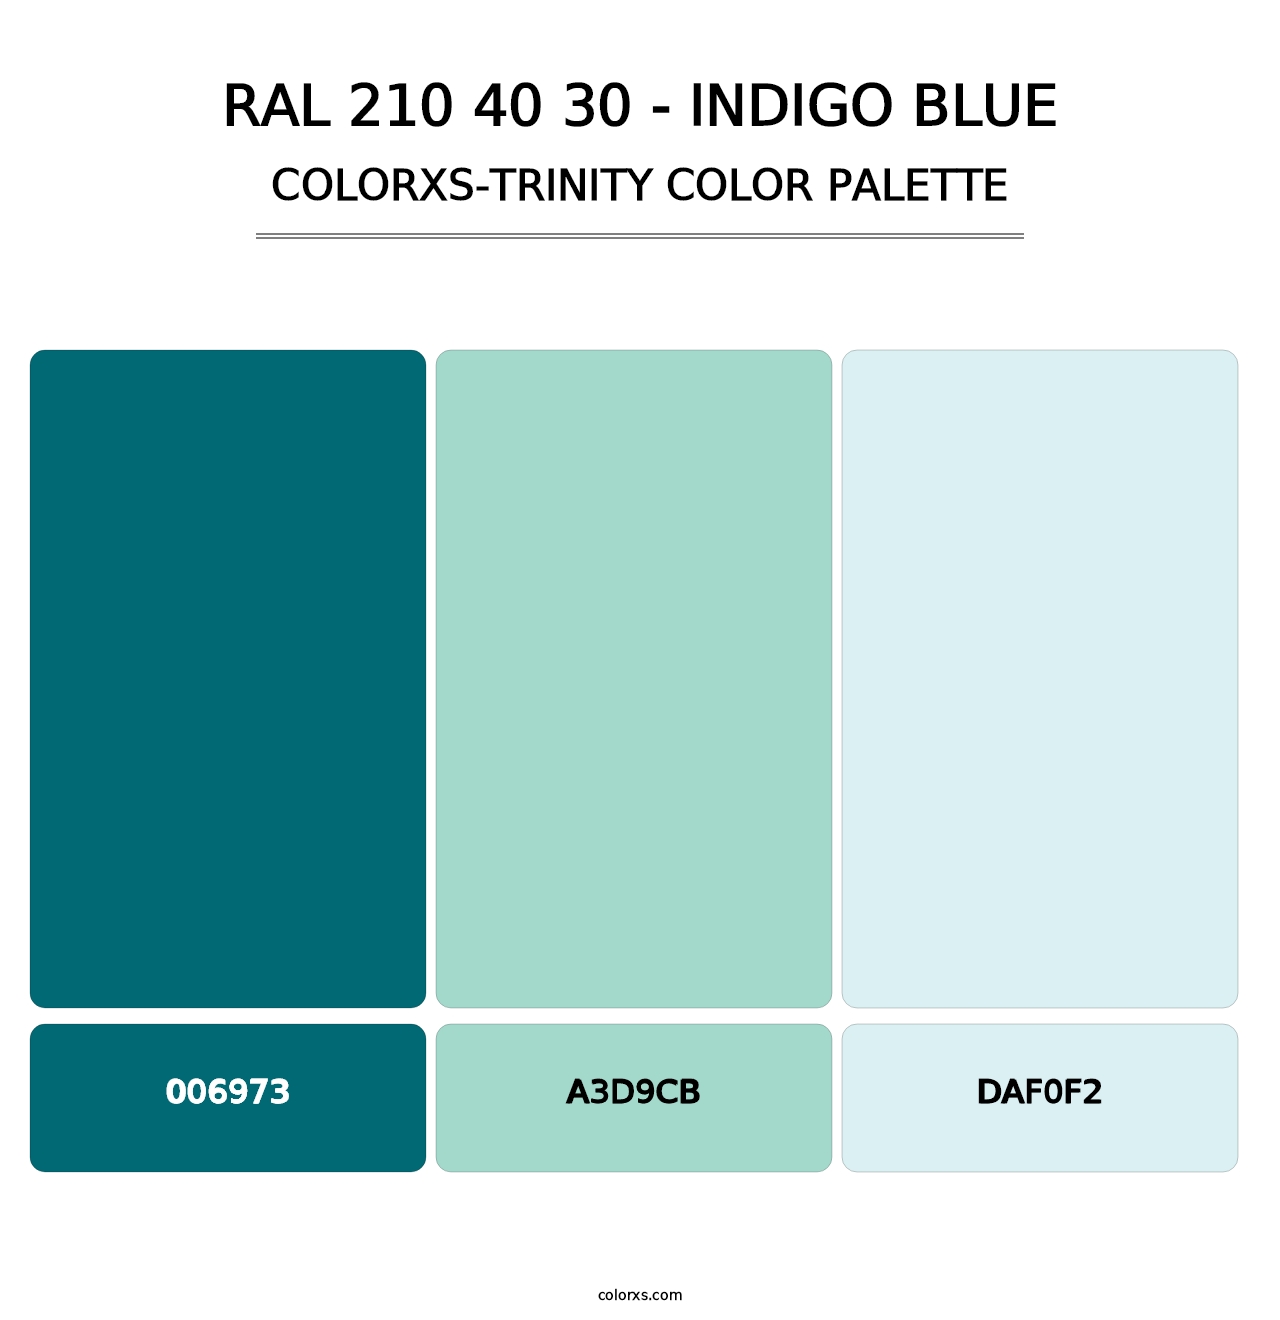 RAL 210 40 30 - Indigo Blue - Colorxs Trinity Palette